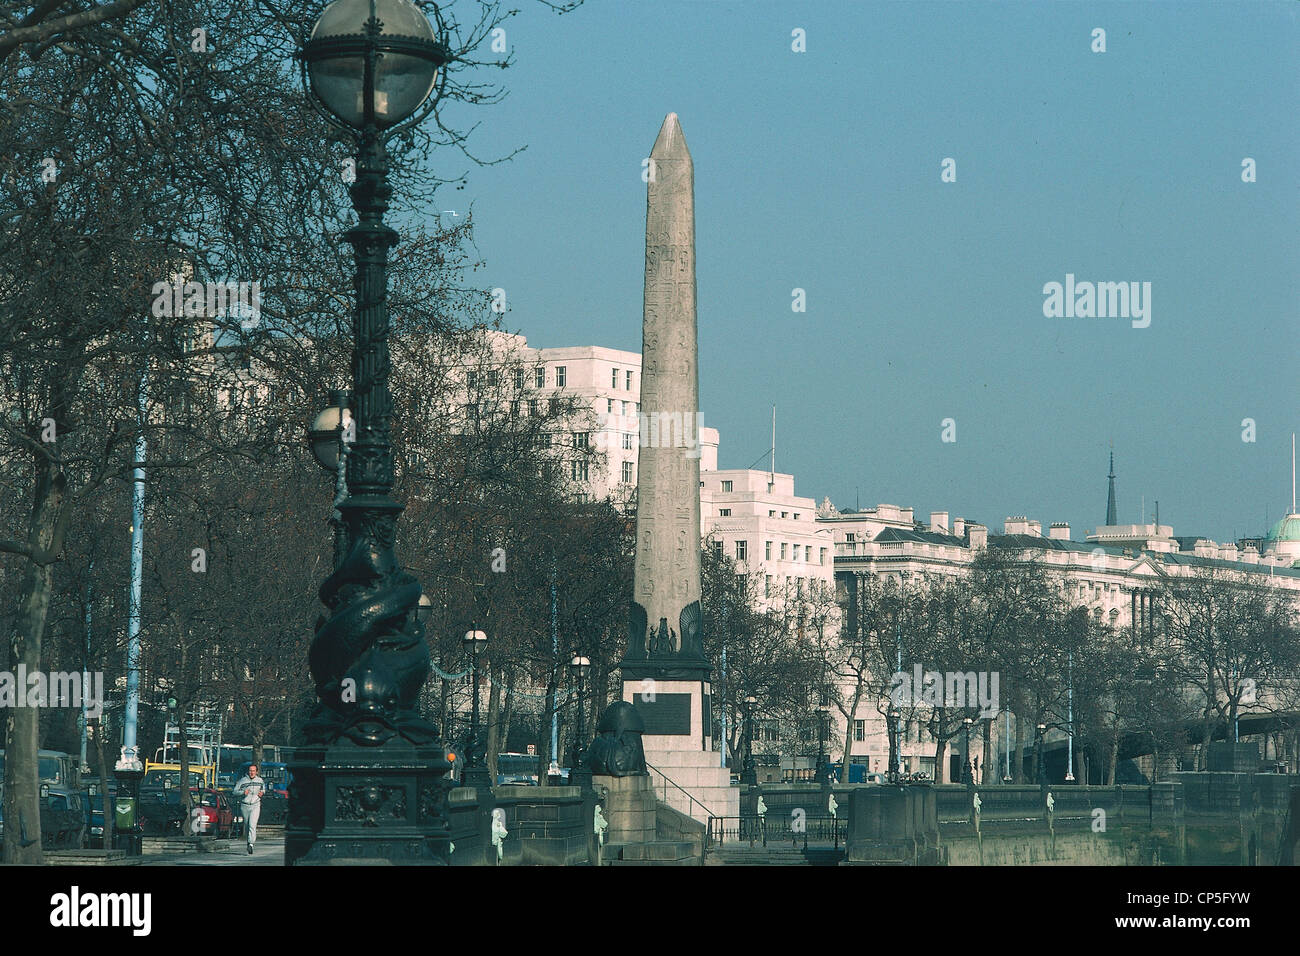 United Kingdom - England - London - der ägyptische Obelisk Kleopatras Nadel (Nadel der Kleopatra). Stockfoto